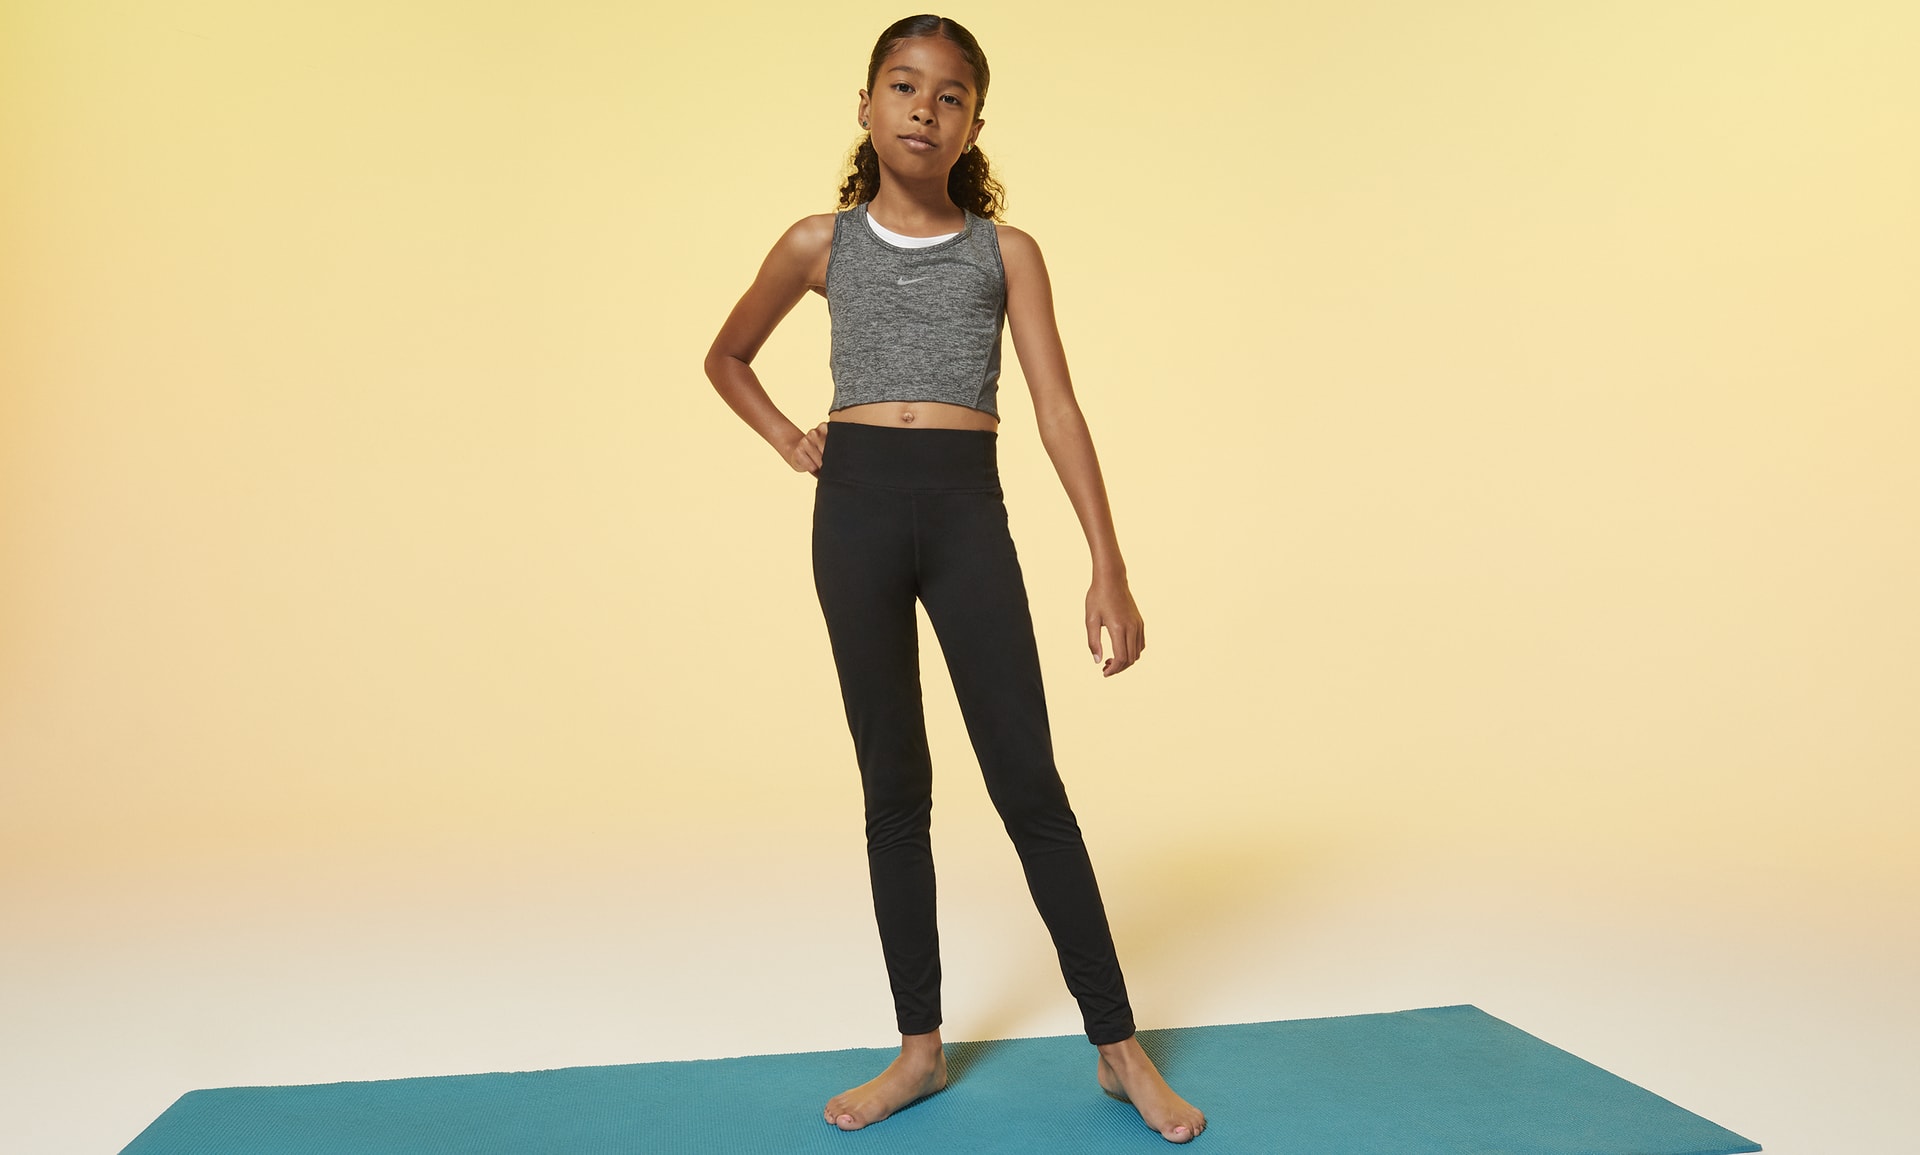 Jahrioiu Yoga Pants for Kids 9-10 Leggings Ladies Athletic Running